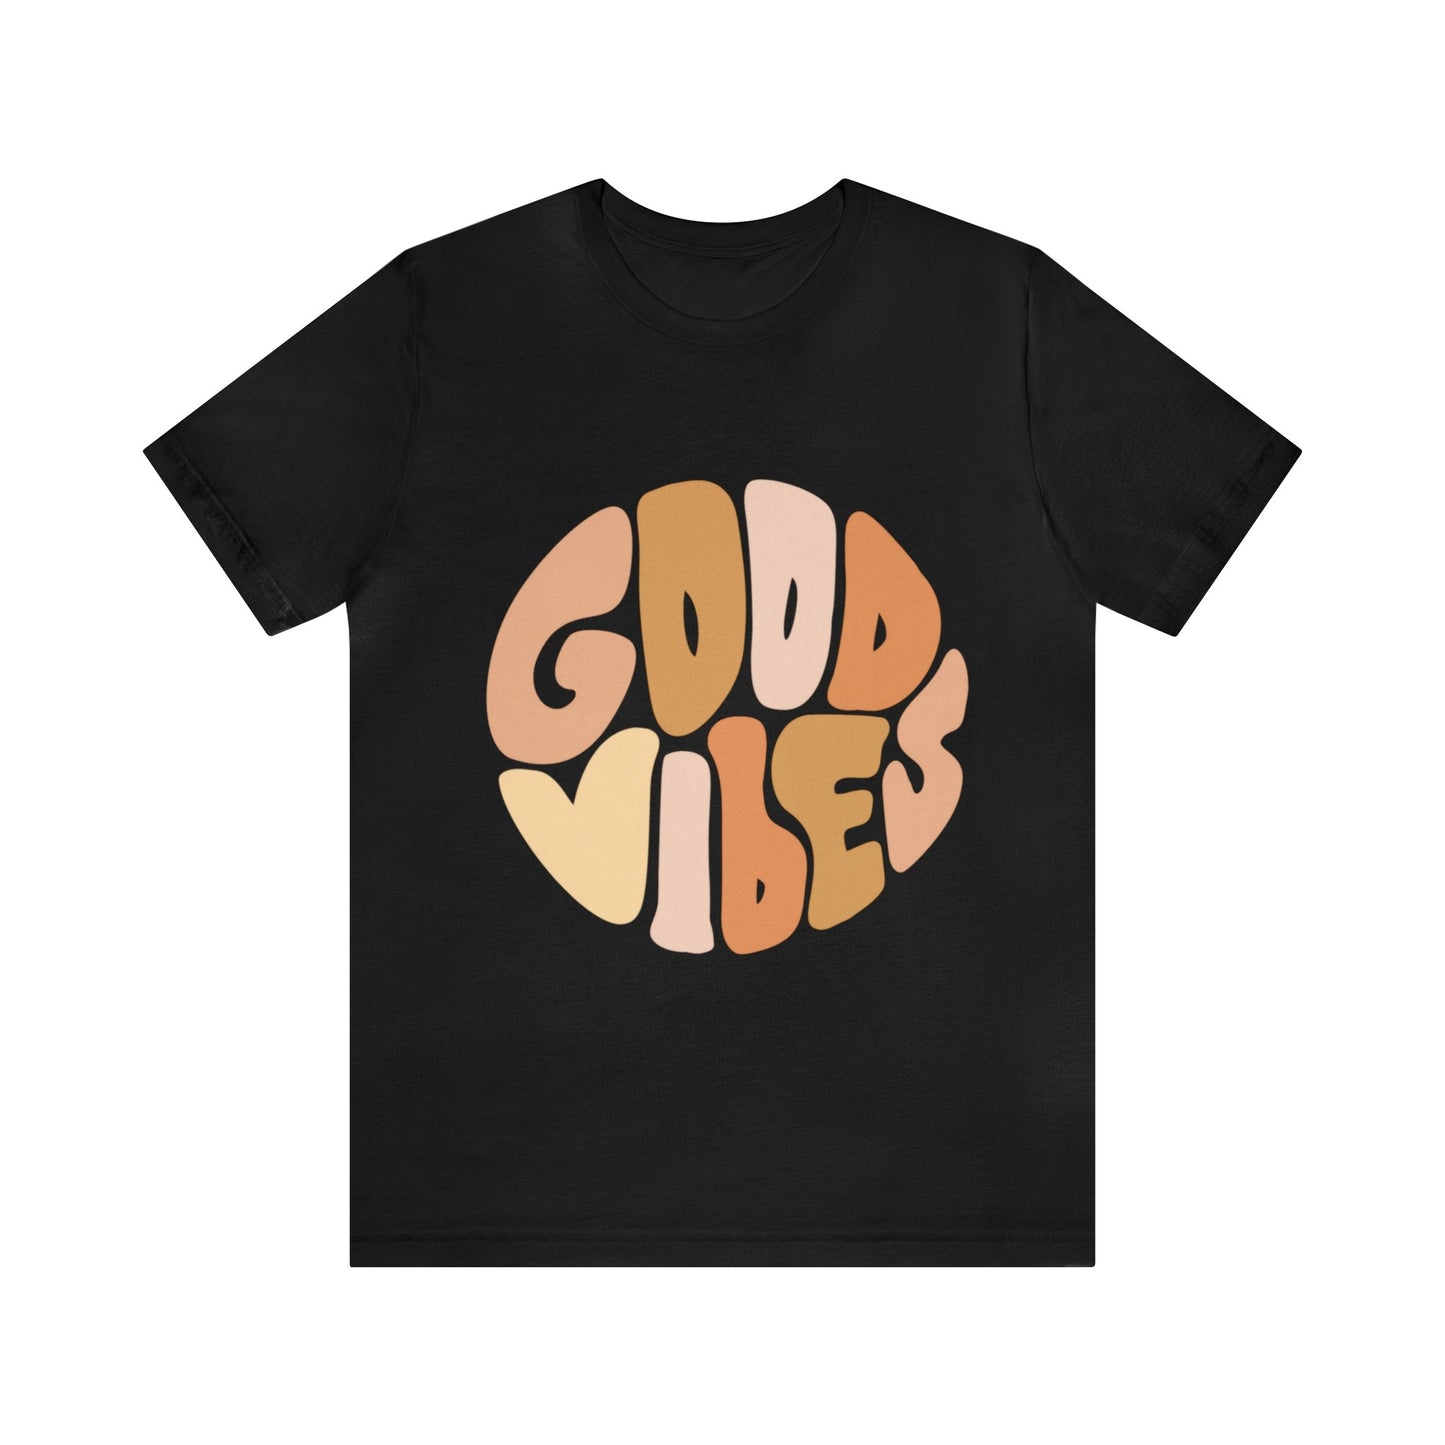 Good Vibes - Positive, Inspirational, Motivational T Shirt For Men and Women